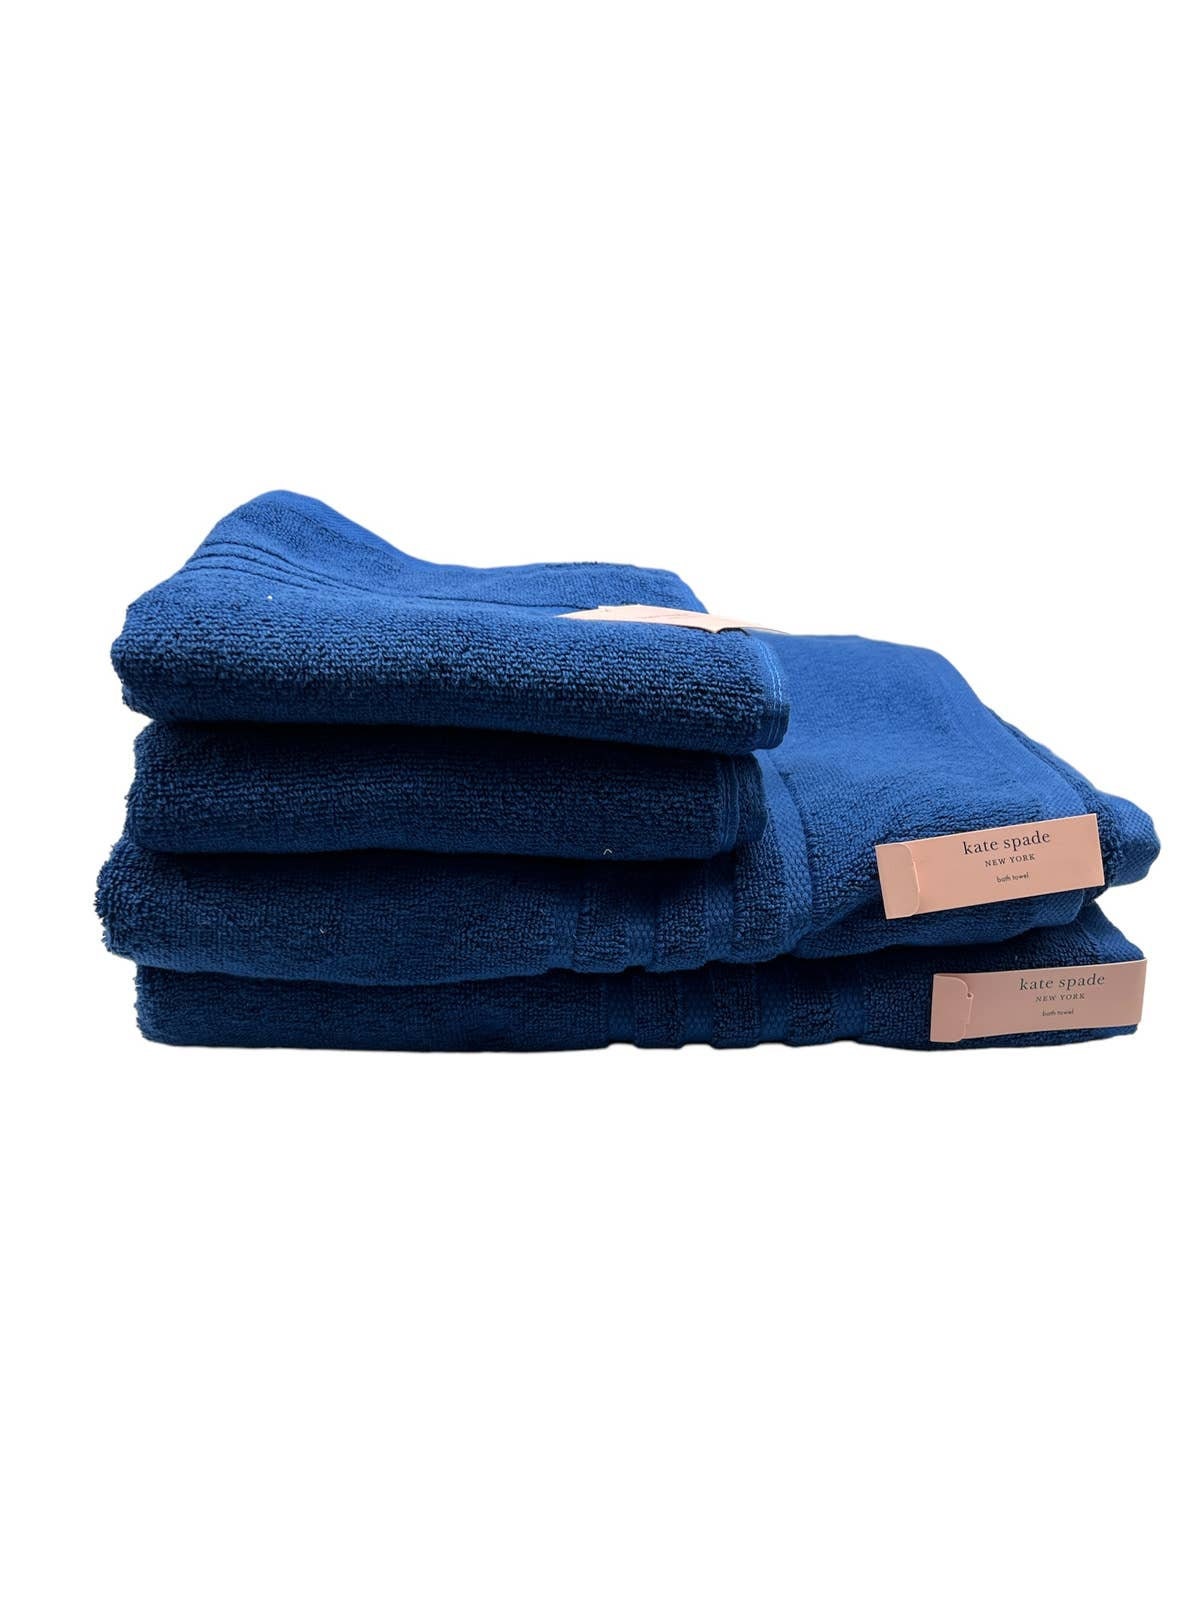 Kate Spade Blue Bath Towels Set of 4 - Etsy